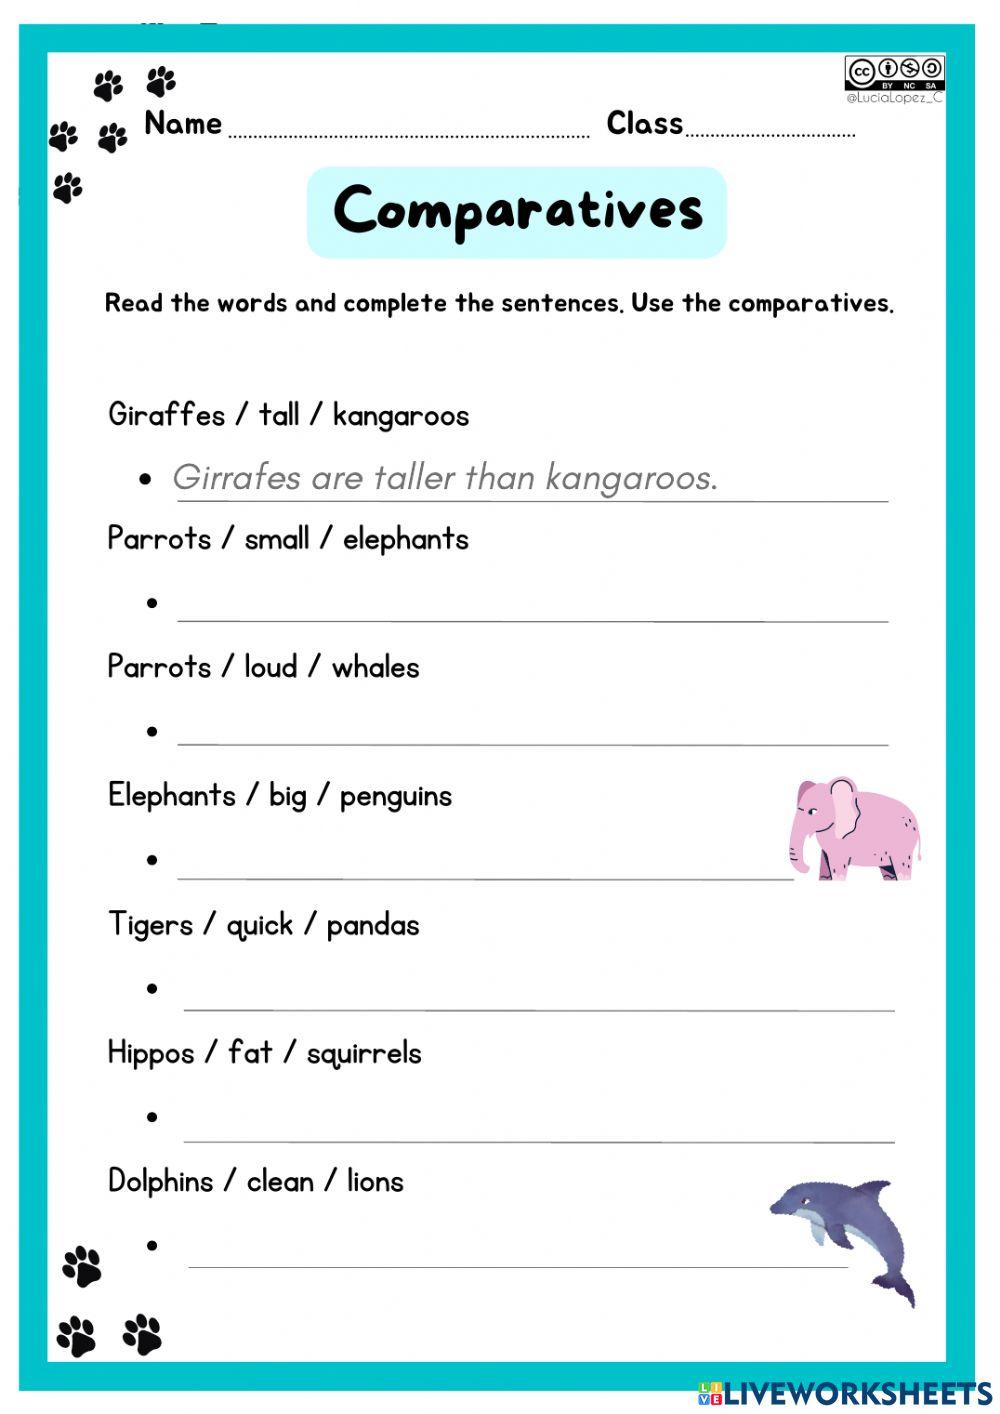 Animals & Comparatives